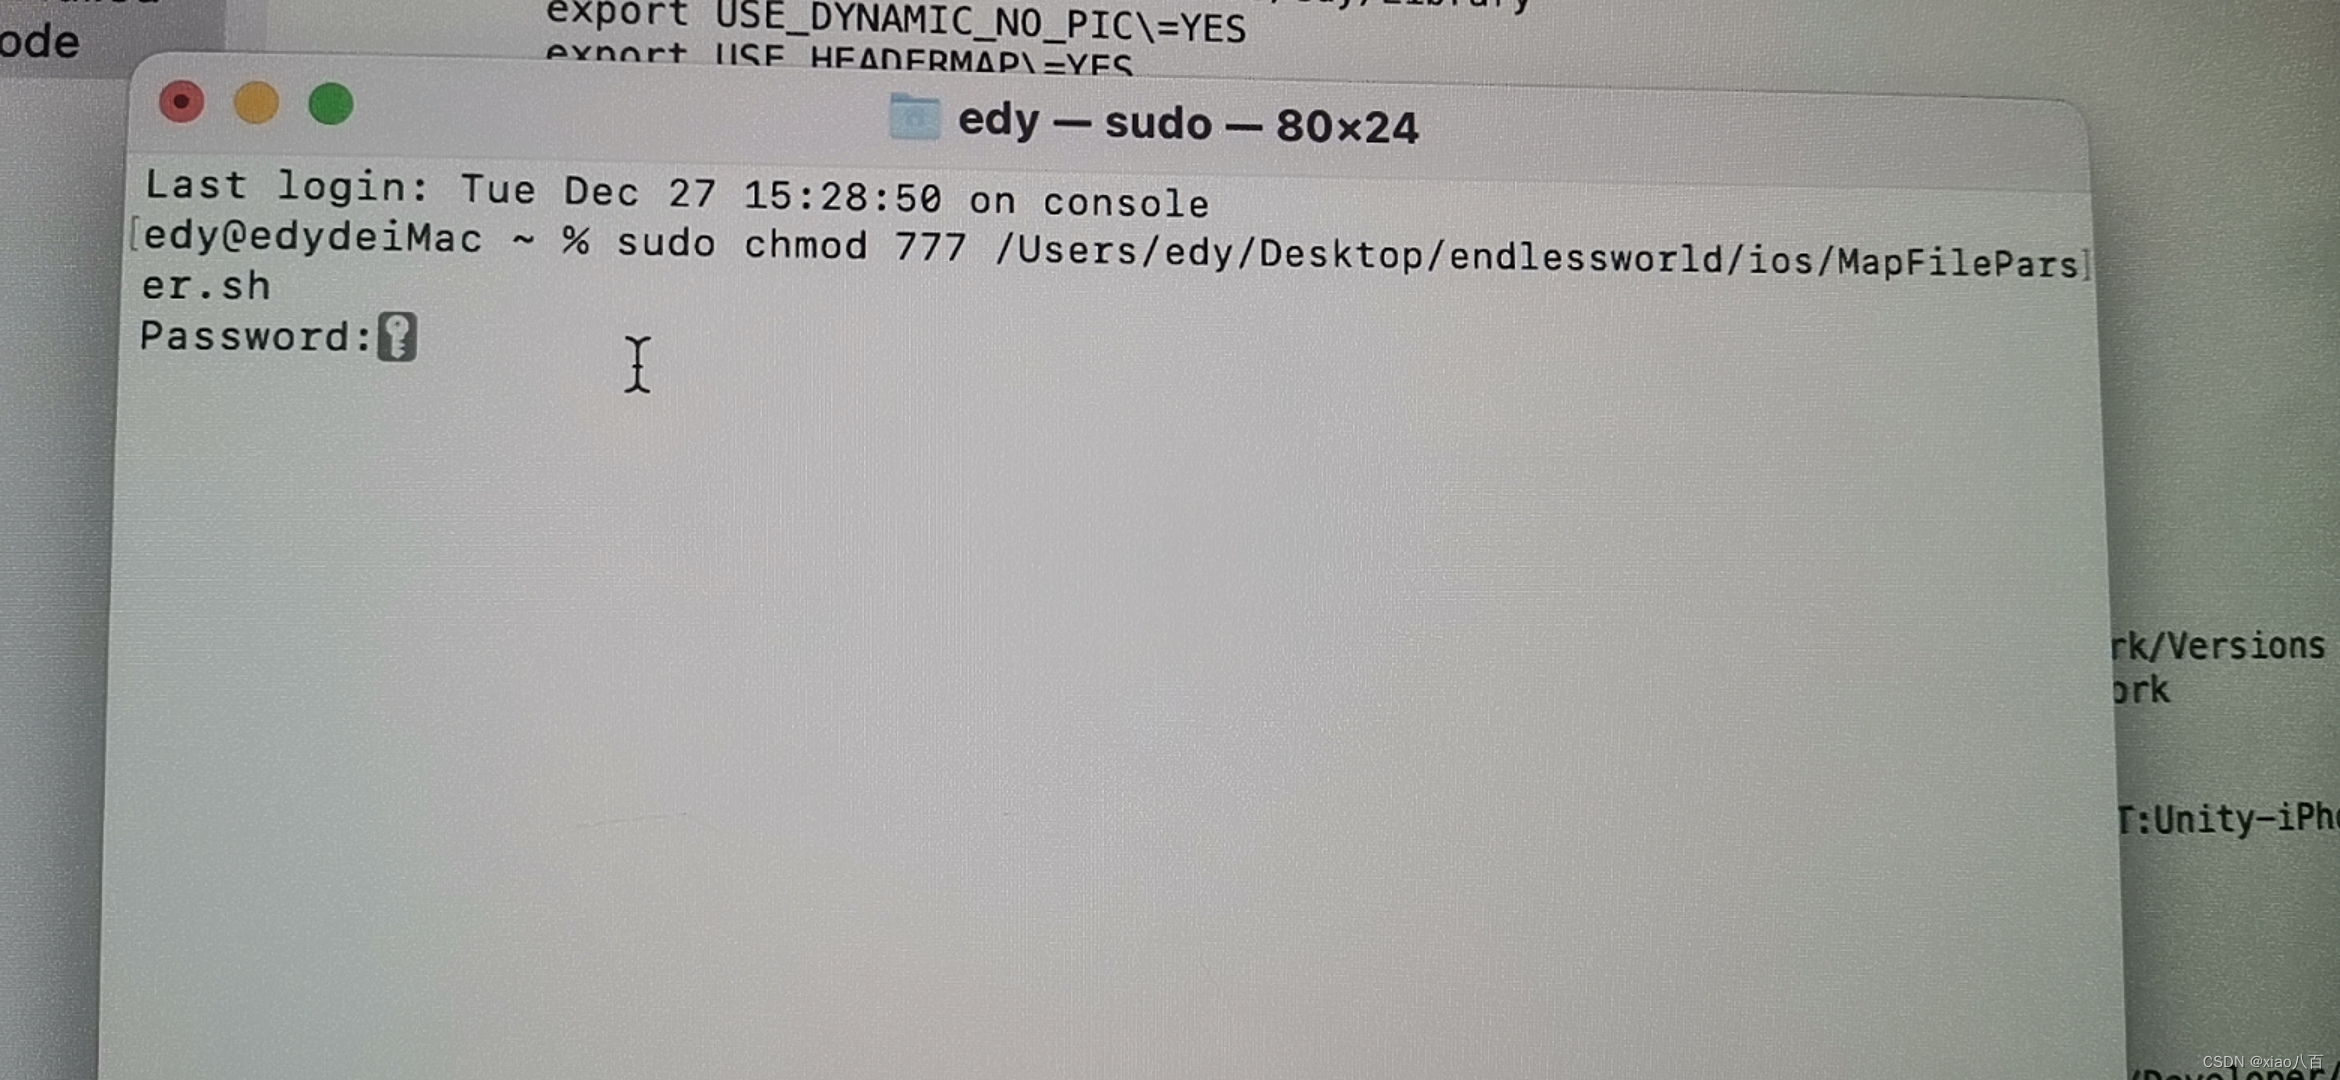 installation of package had nonzero exit status mac